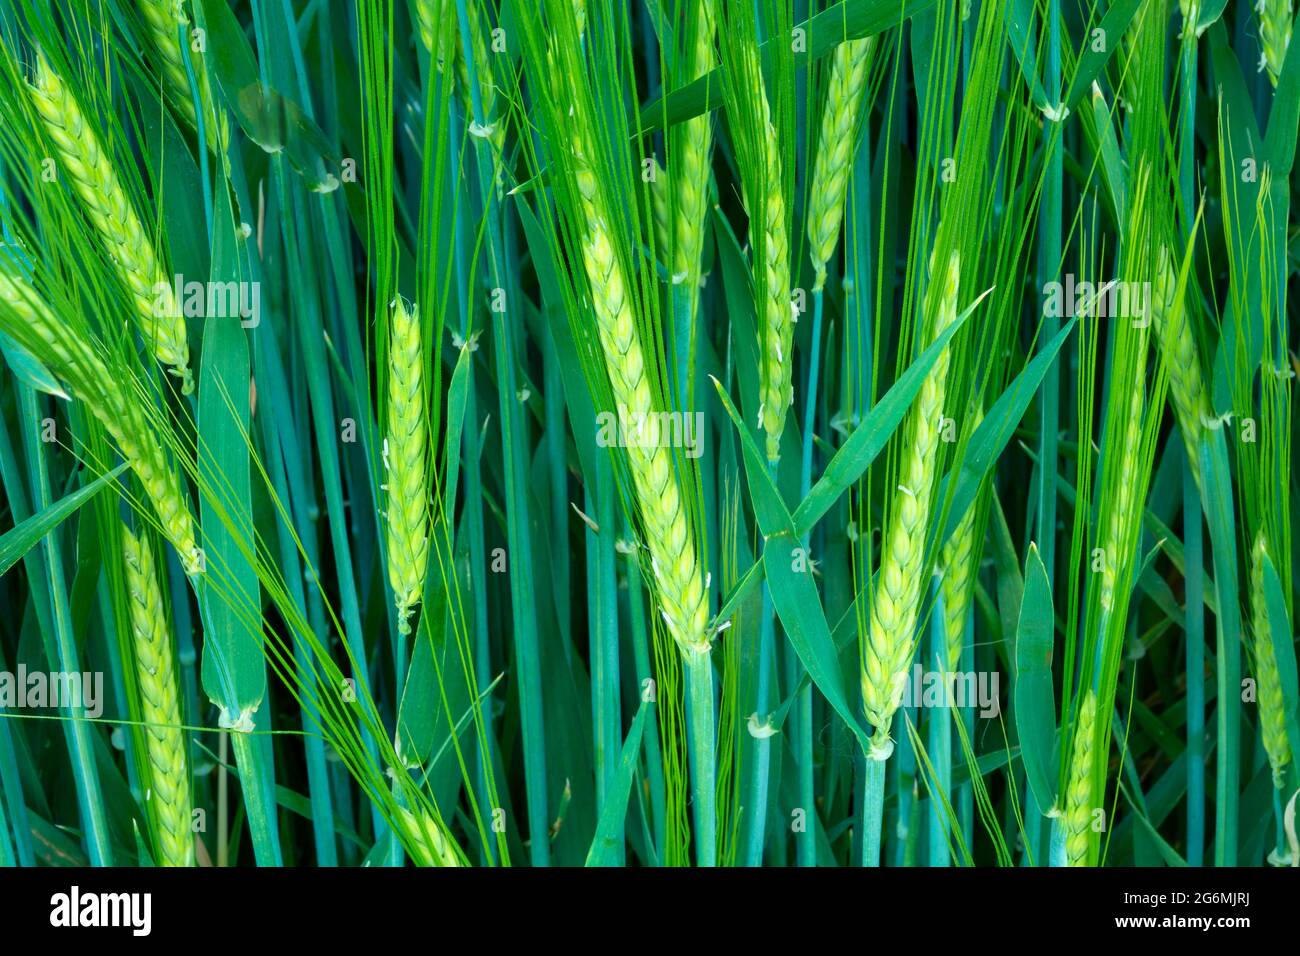 Close up of green barley grain ears Stock Photo